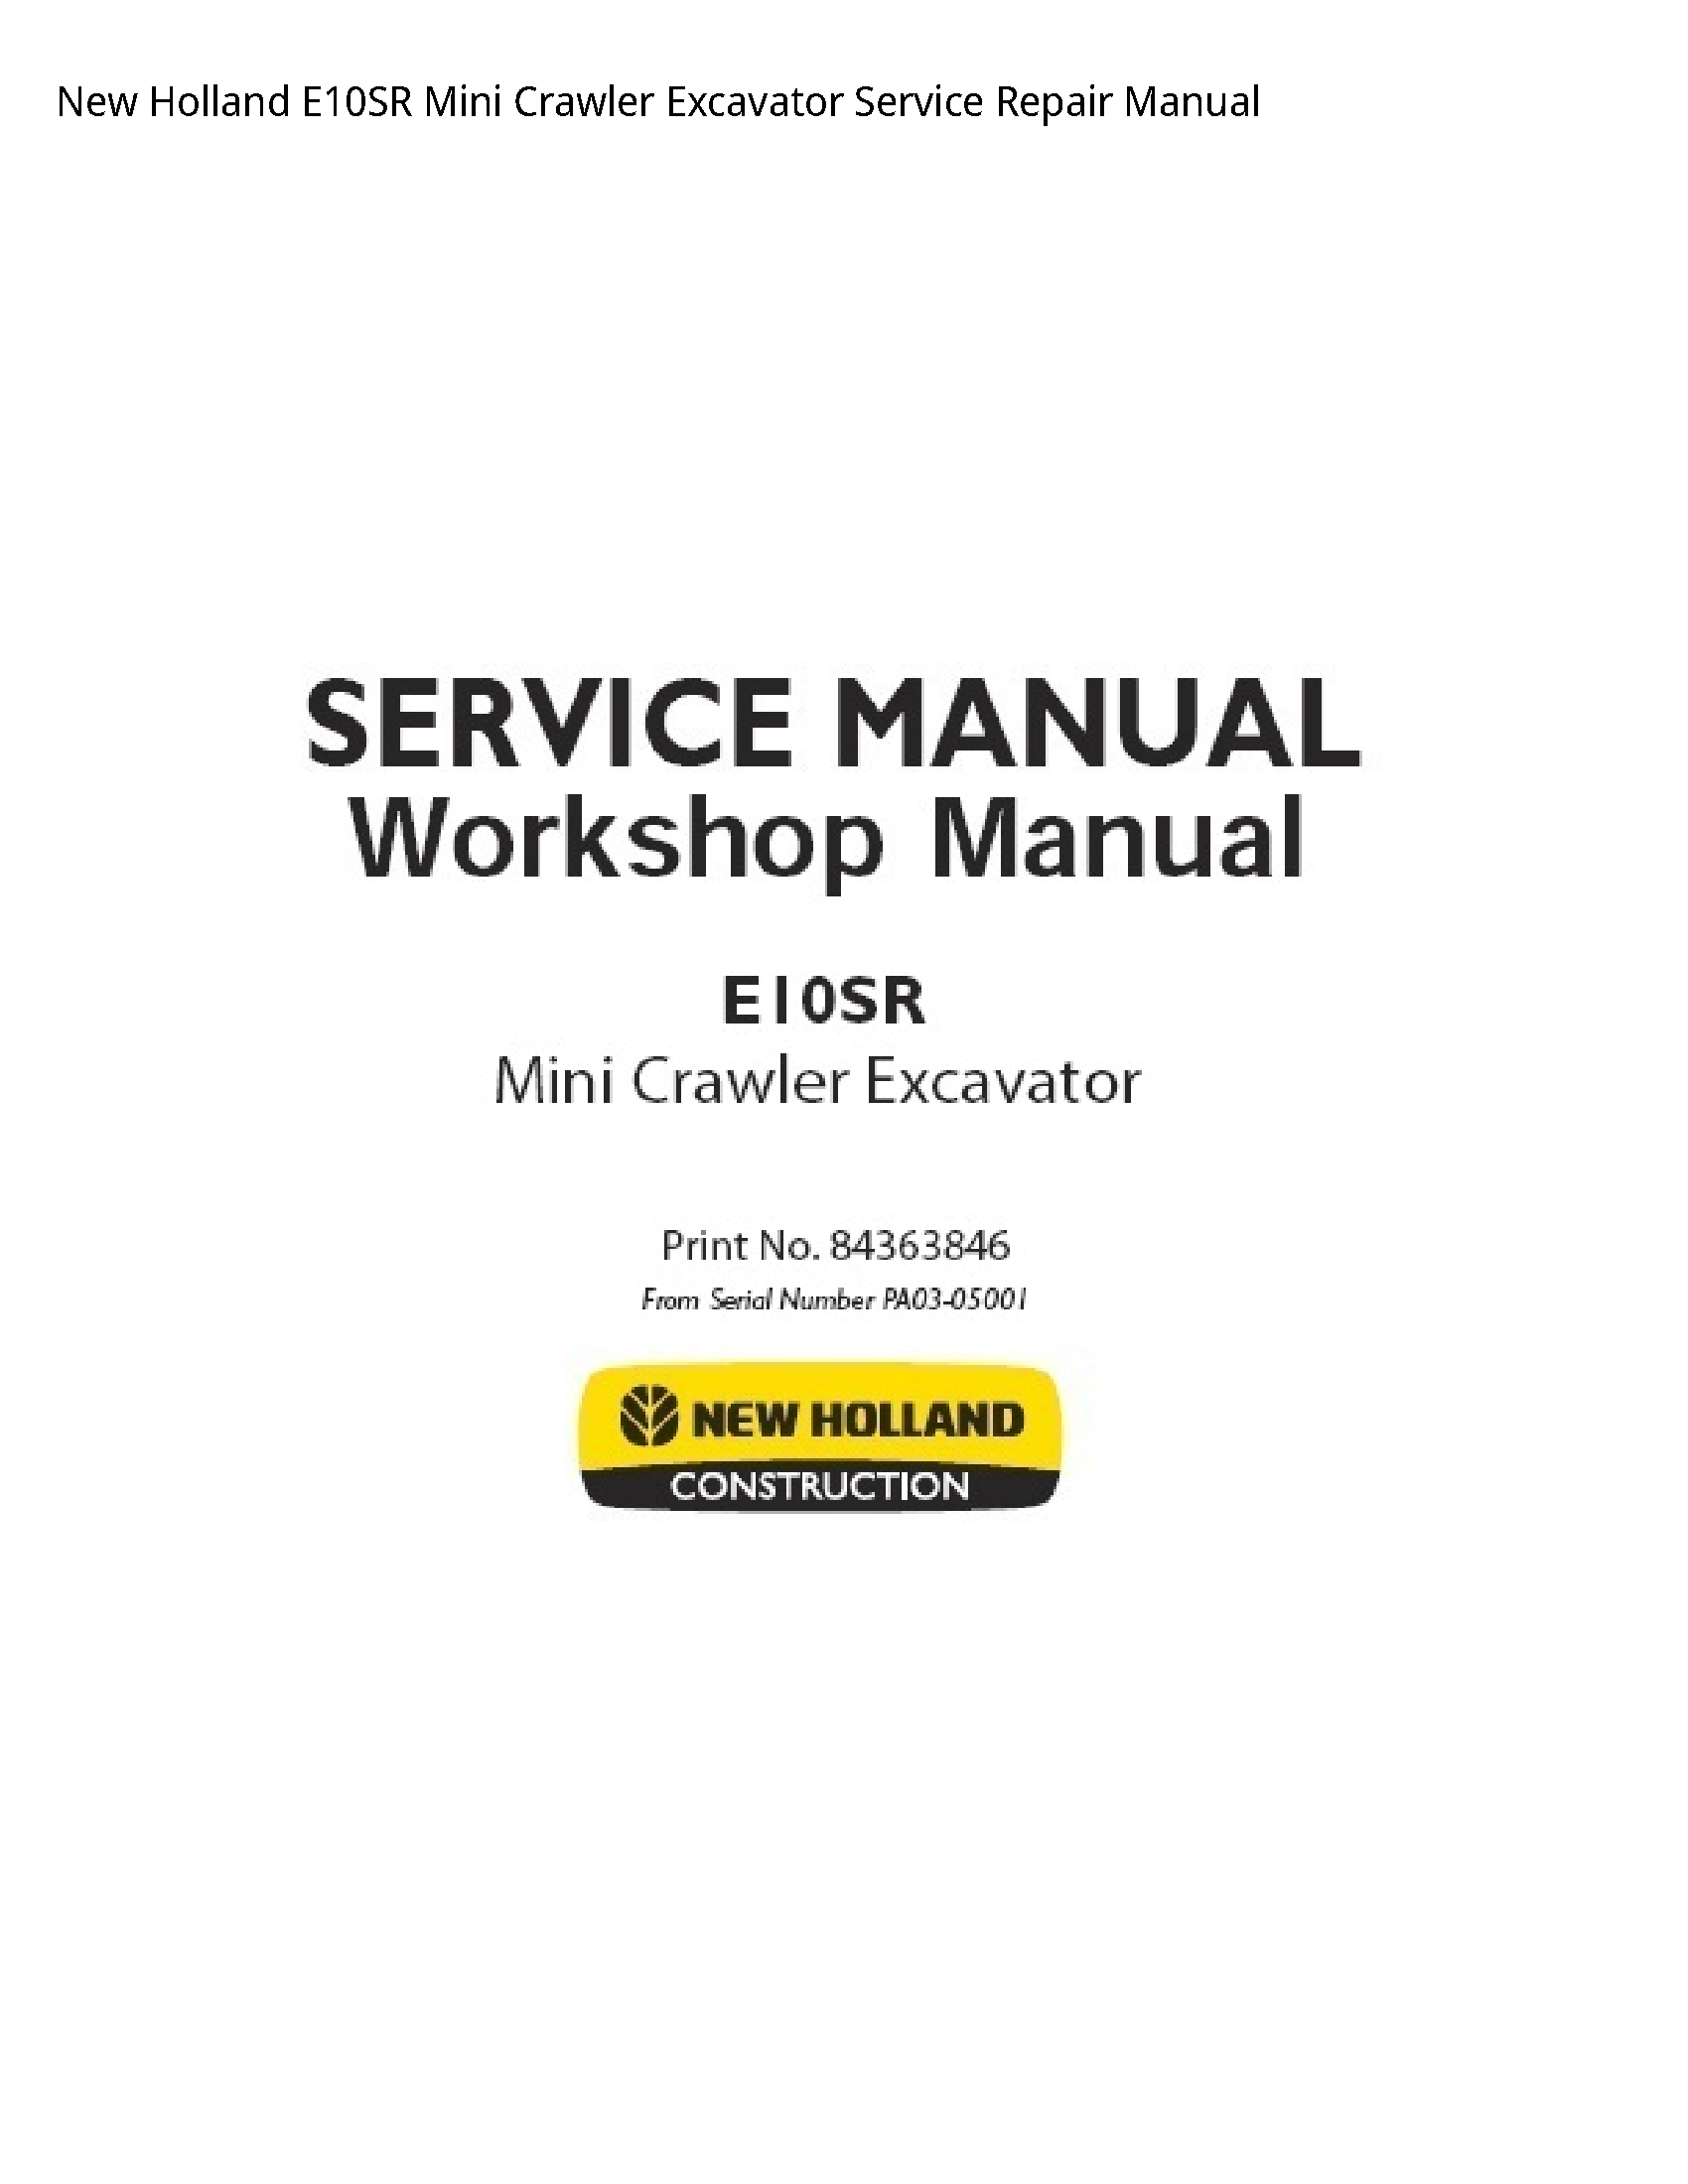 New Holland E10SR Mini Crawler Excavator manual